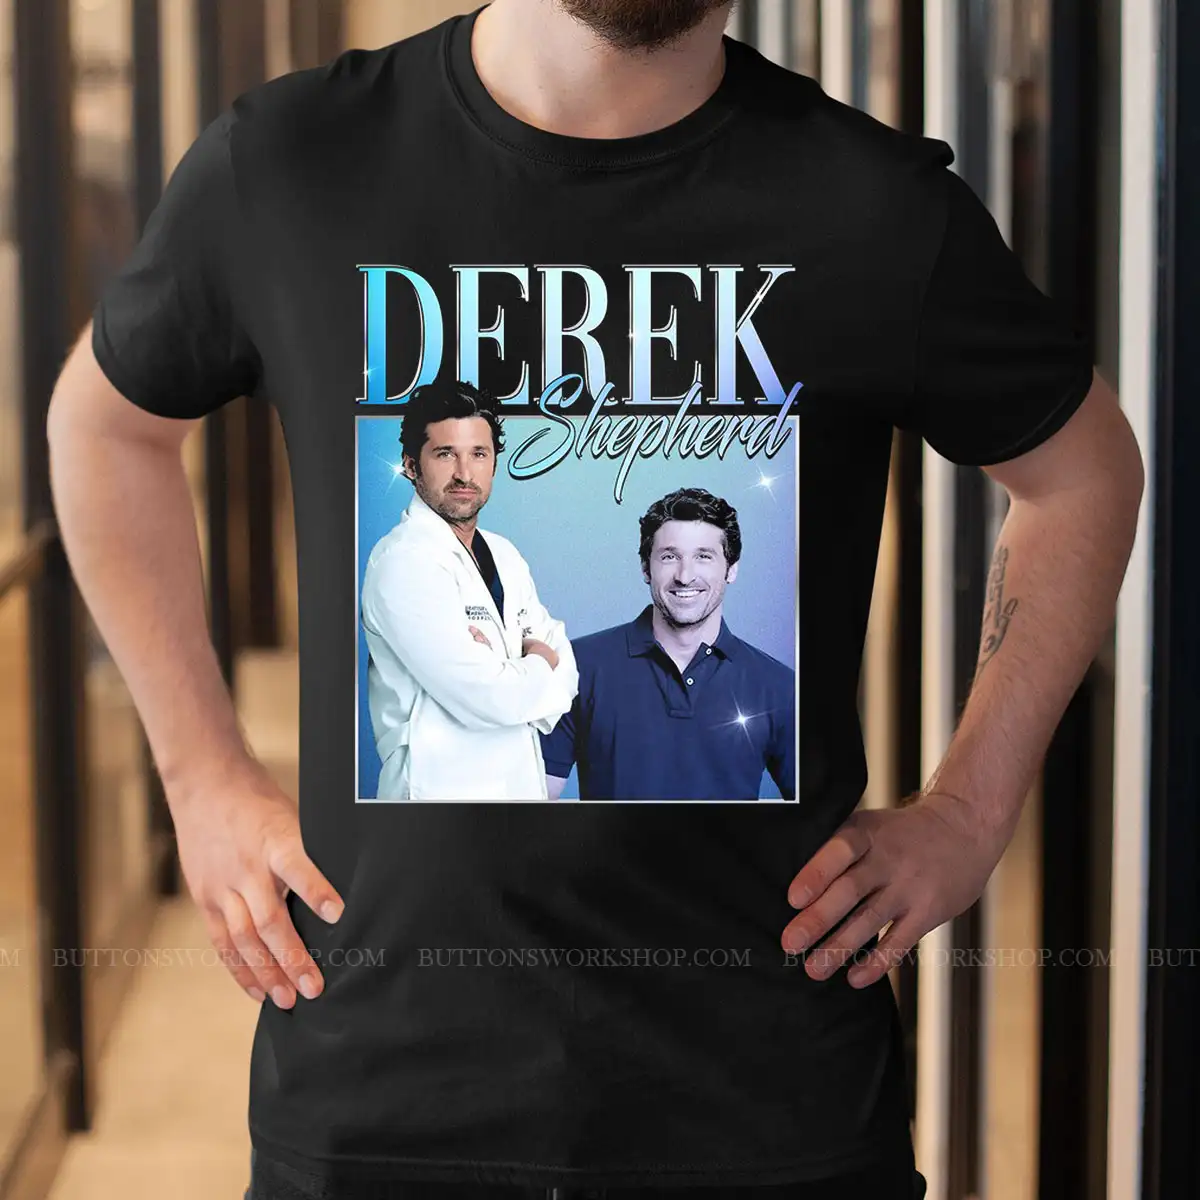 Derek Shepherd Shirt Unisex Tshirt